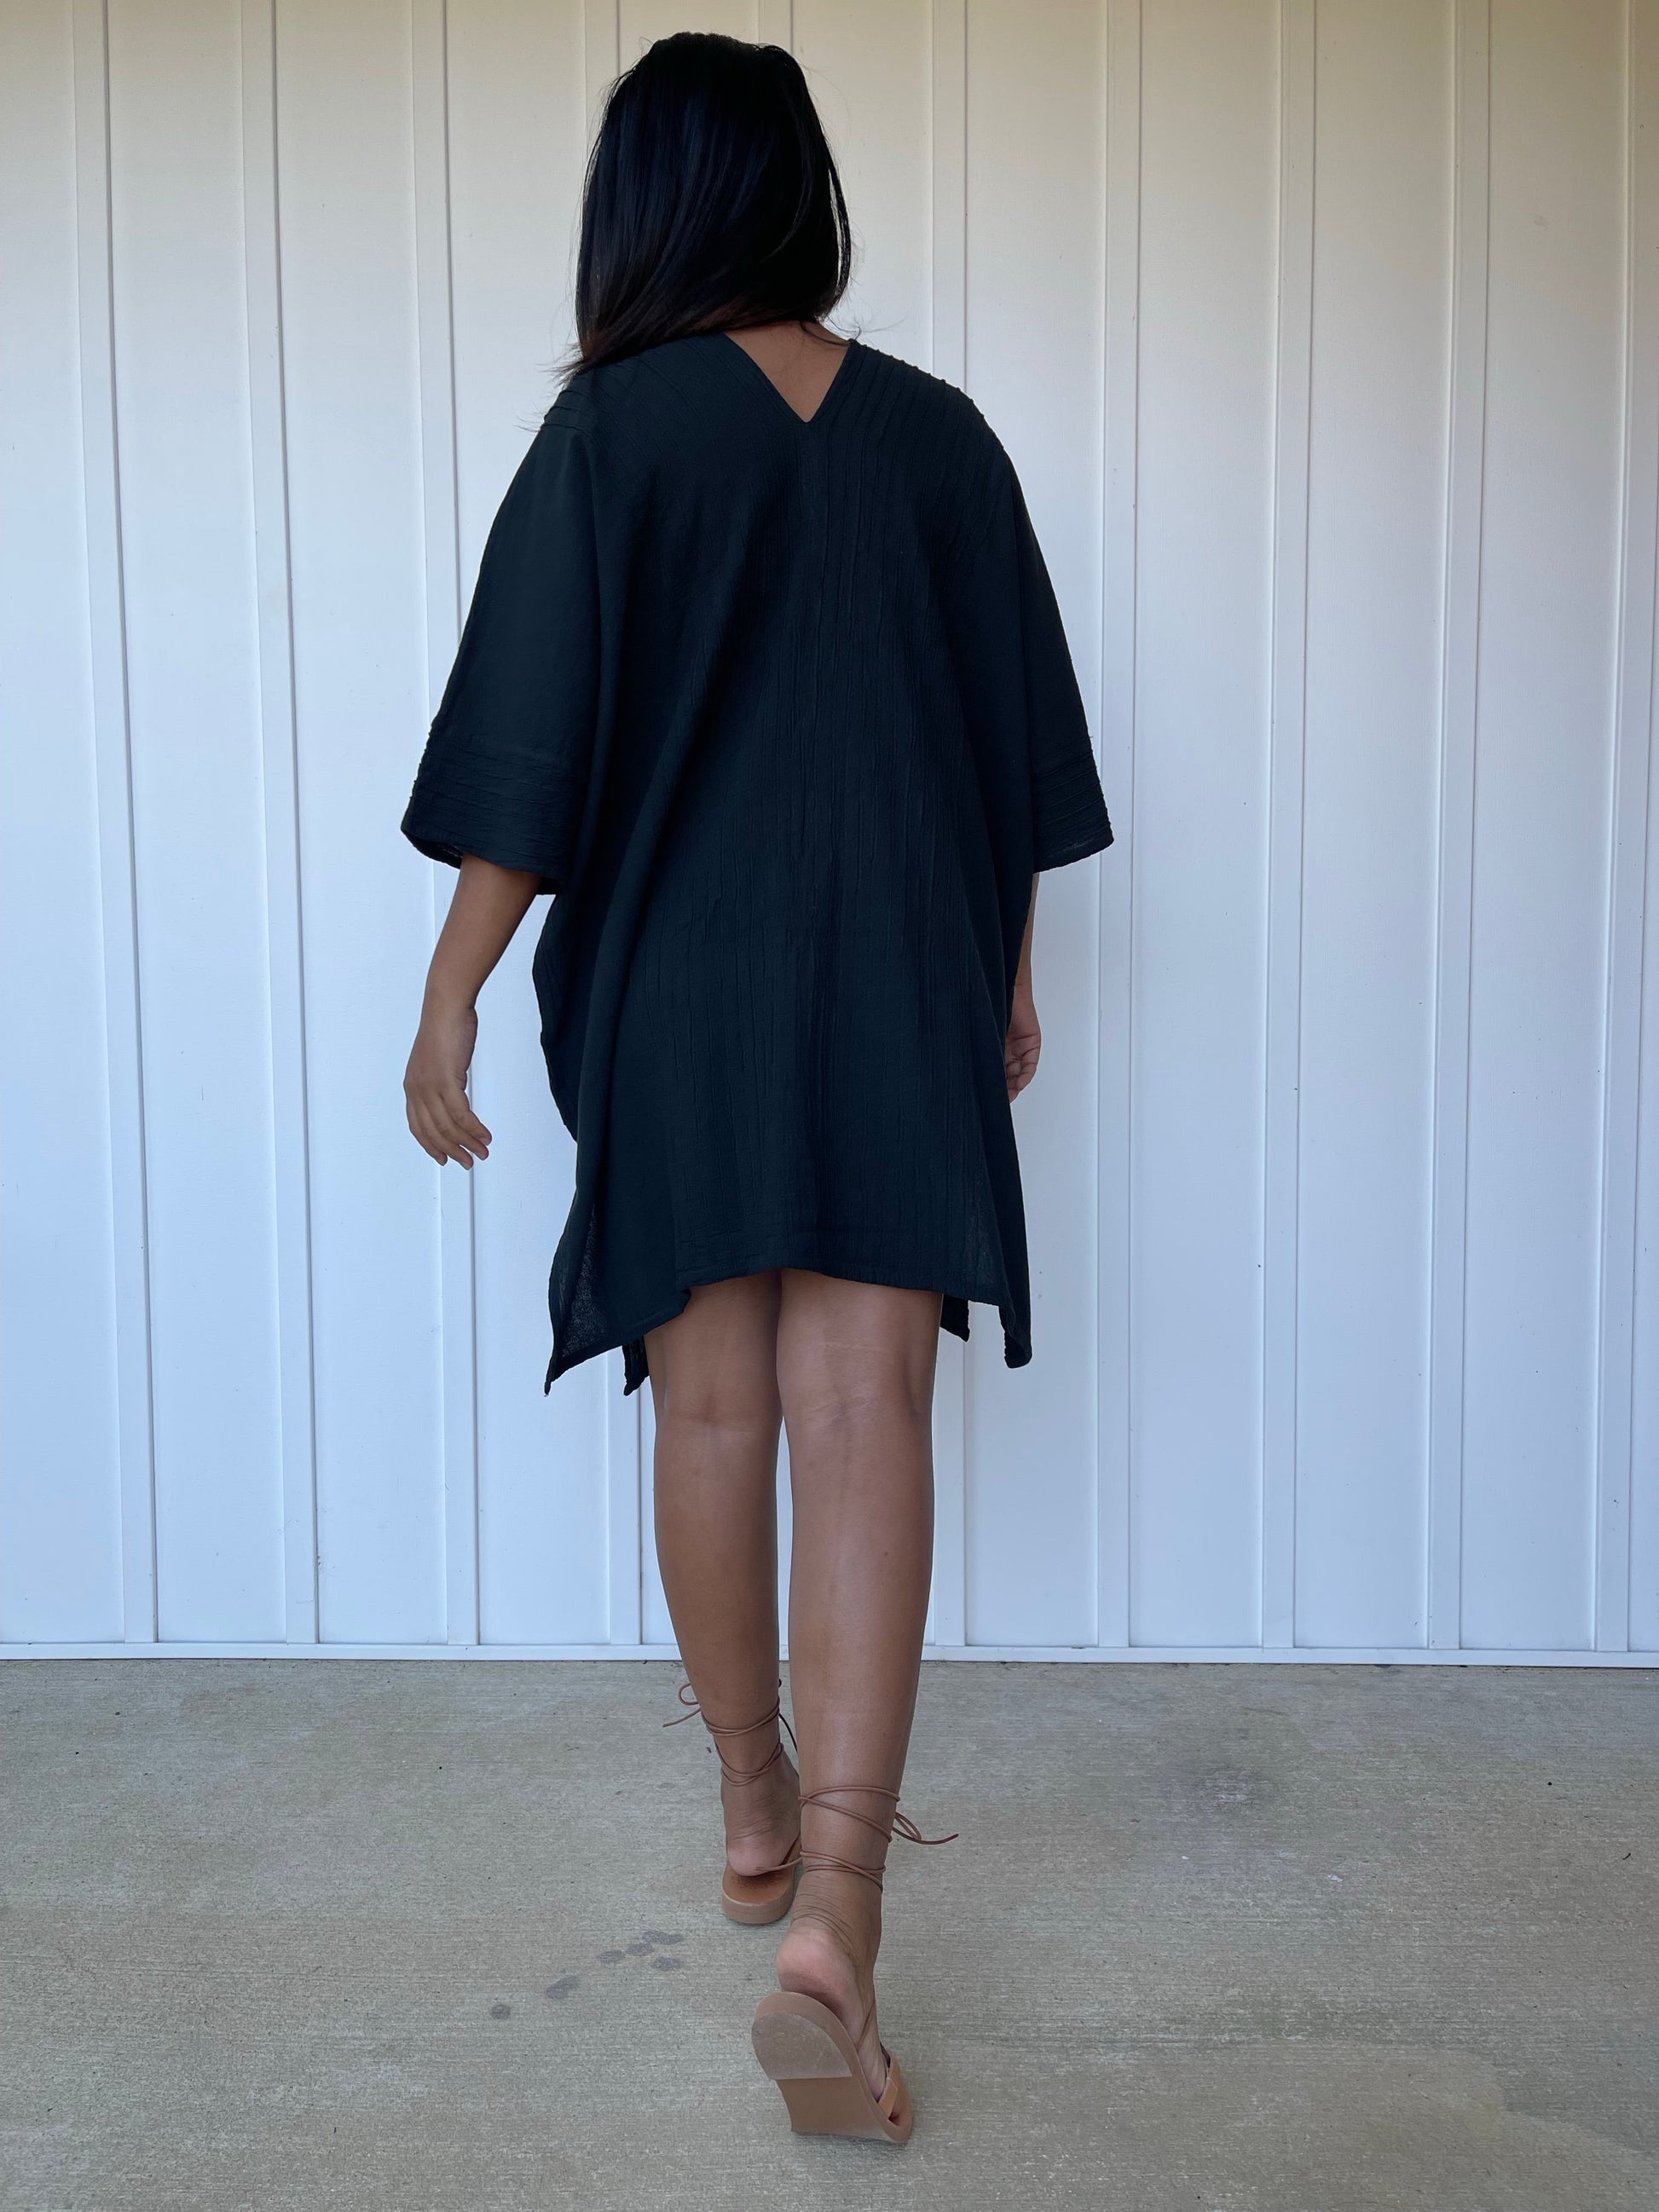 MALA handworks Miyu Midi Dress in Black and Hand Embroidery